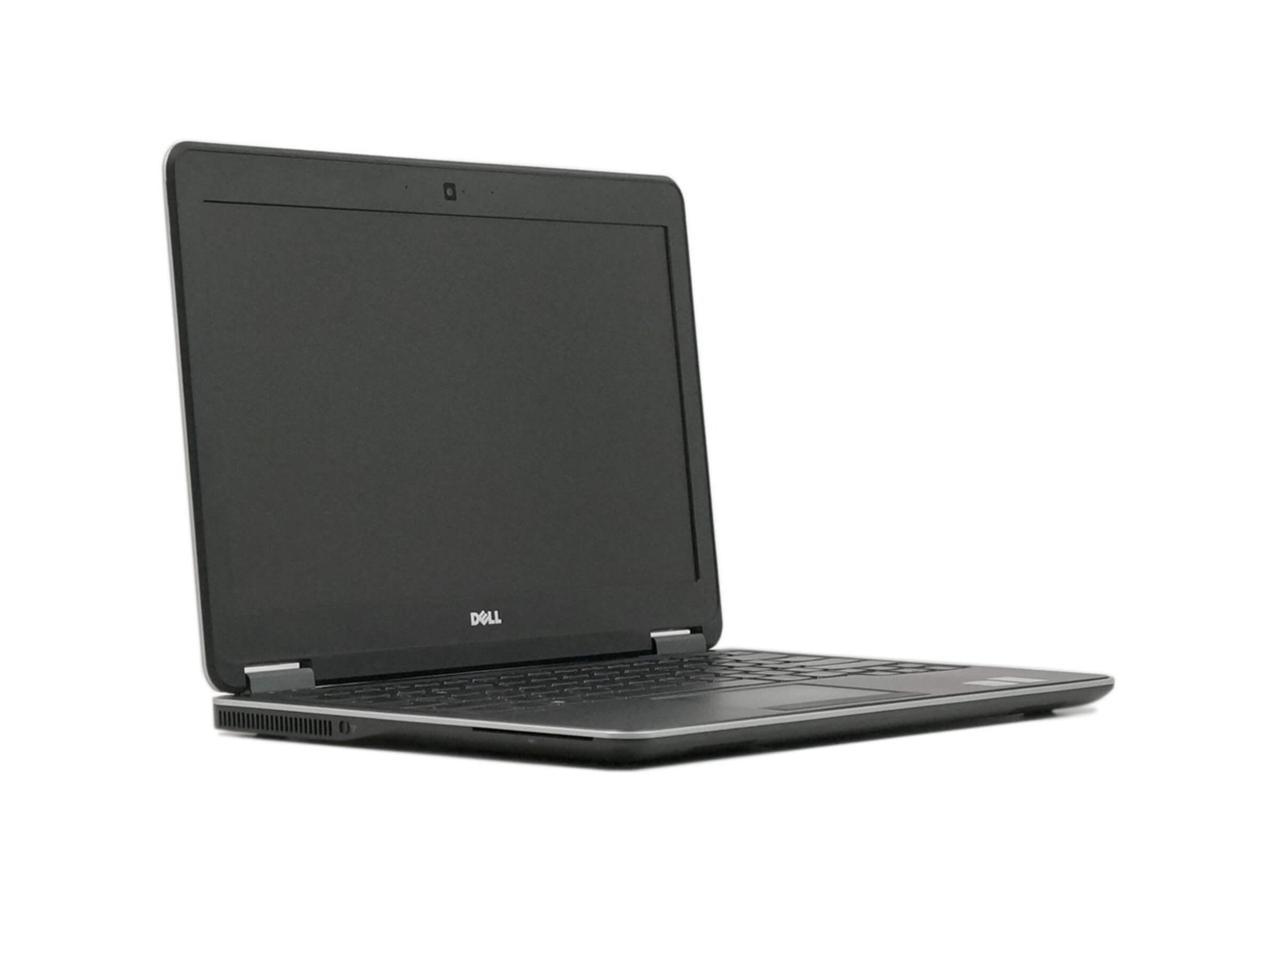 Dell Latitude E7240 12.5 in Laptop - Intel Core i5 4300U 4th Gen 1.9 GHz 4GB 128GB SSD Windows 10 Pro 64-Bit - Webcam